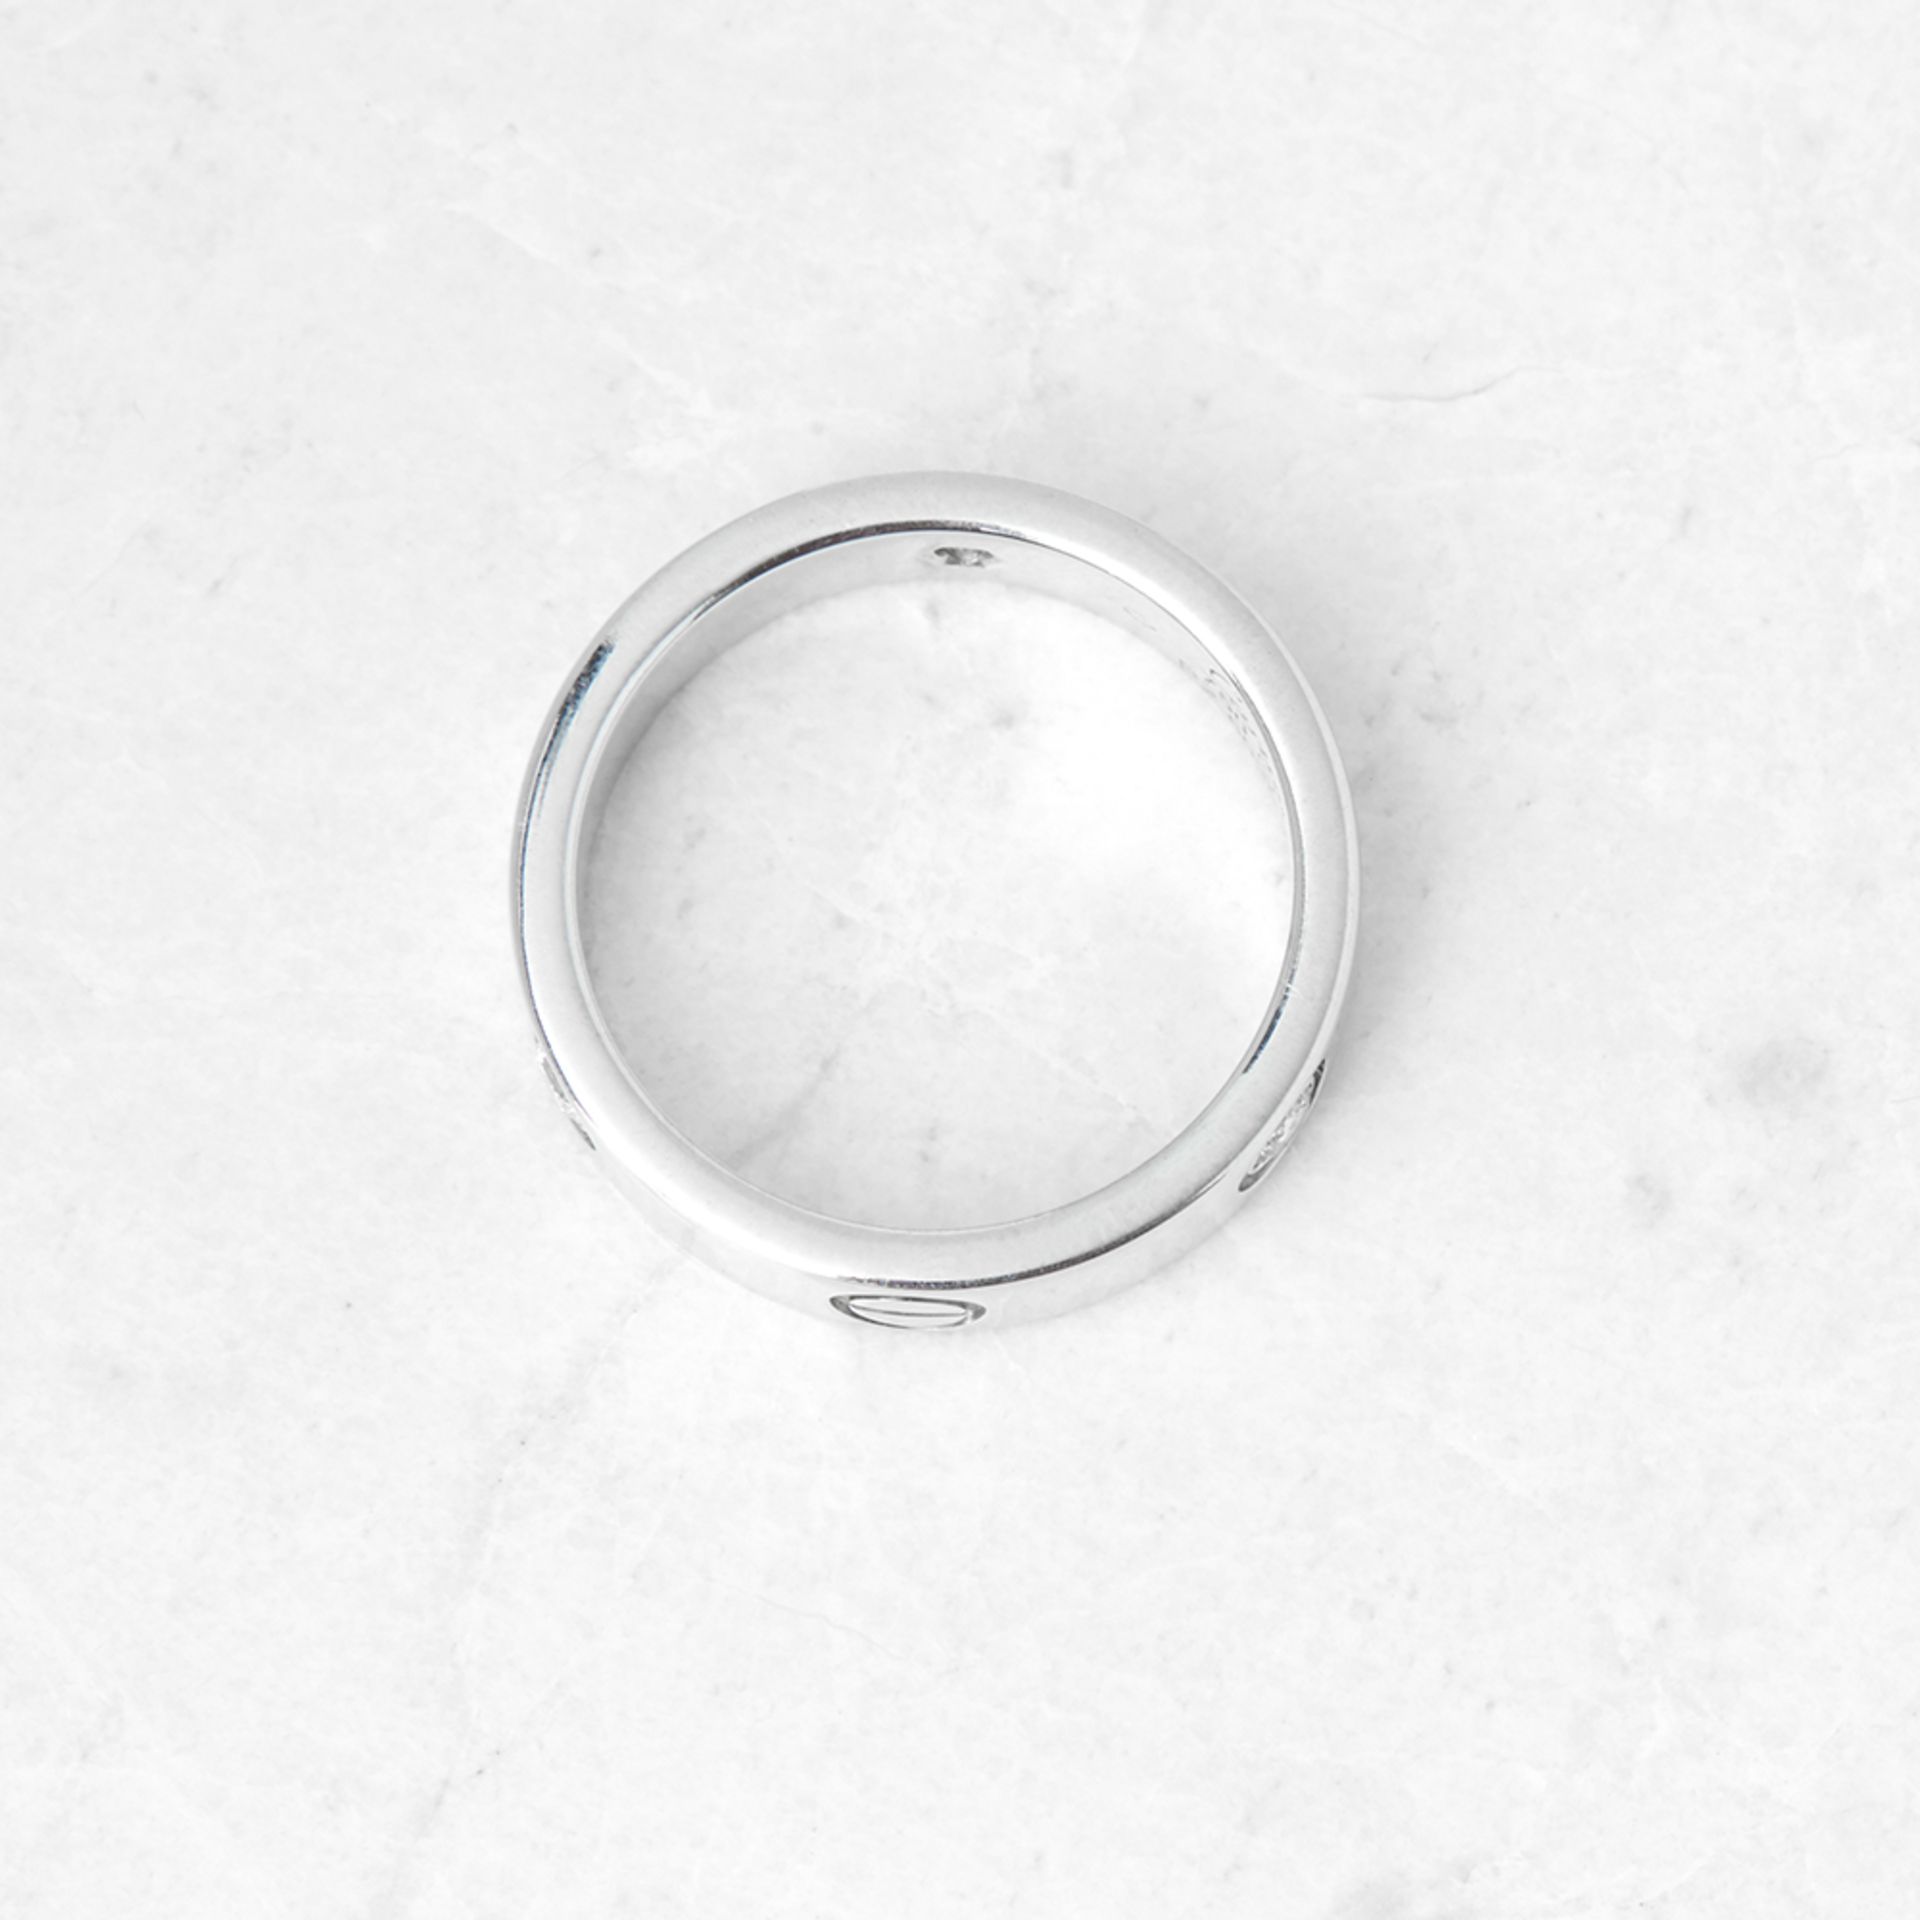 Cartier 18k White Gold 3 Diamond Love Ring - Image 4 of 5